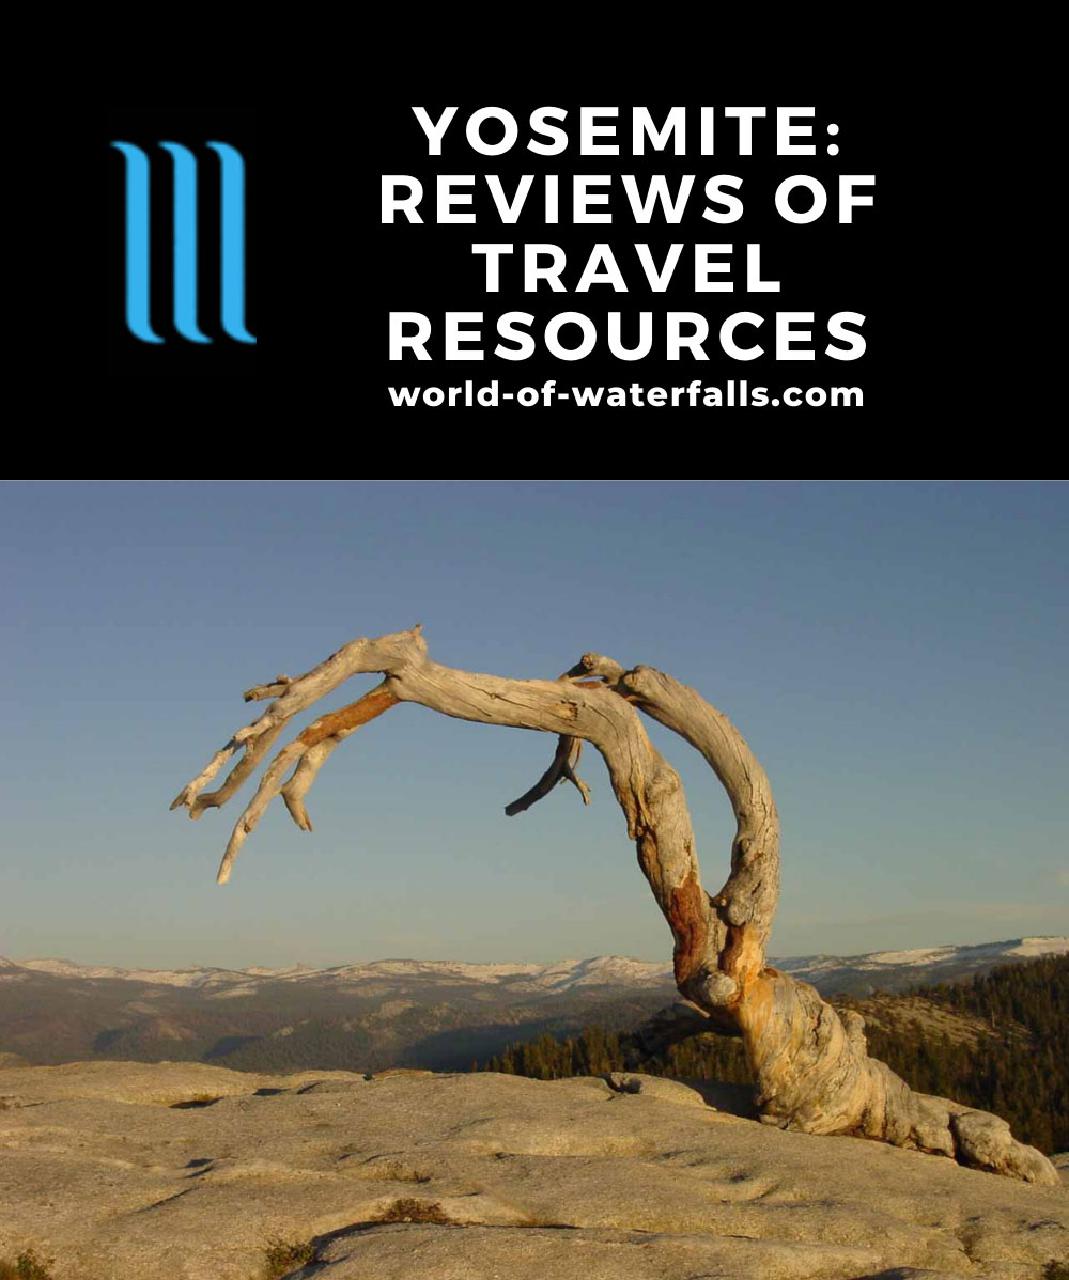 Yosemite: Reviews of Travel Resources